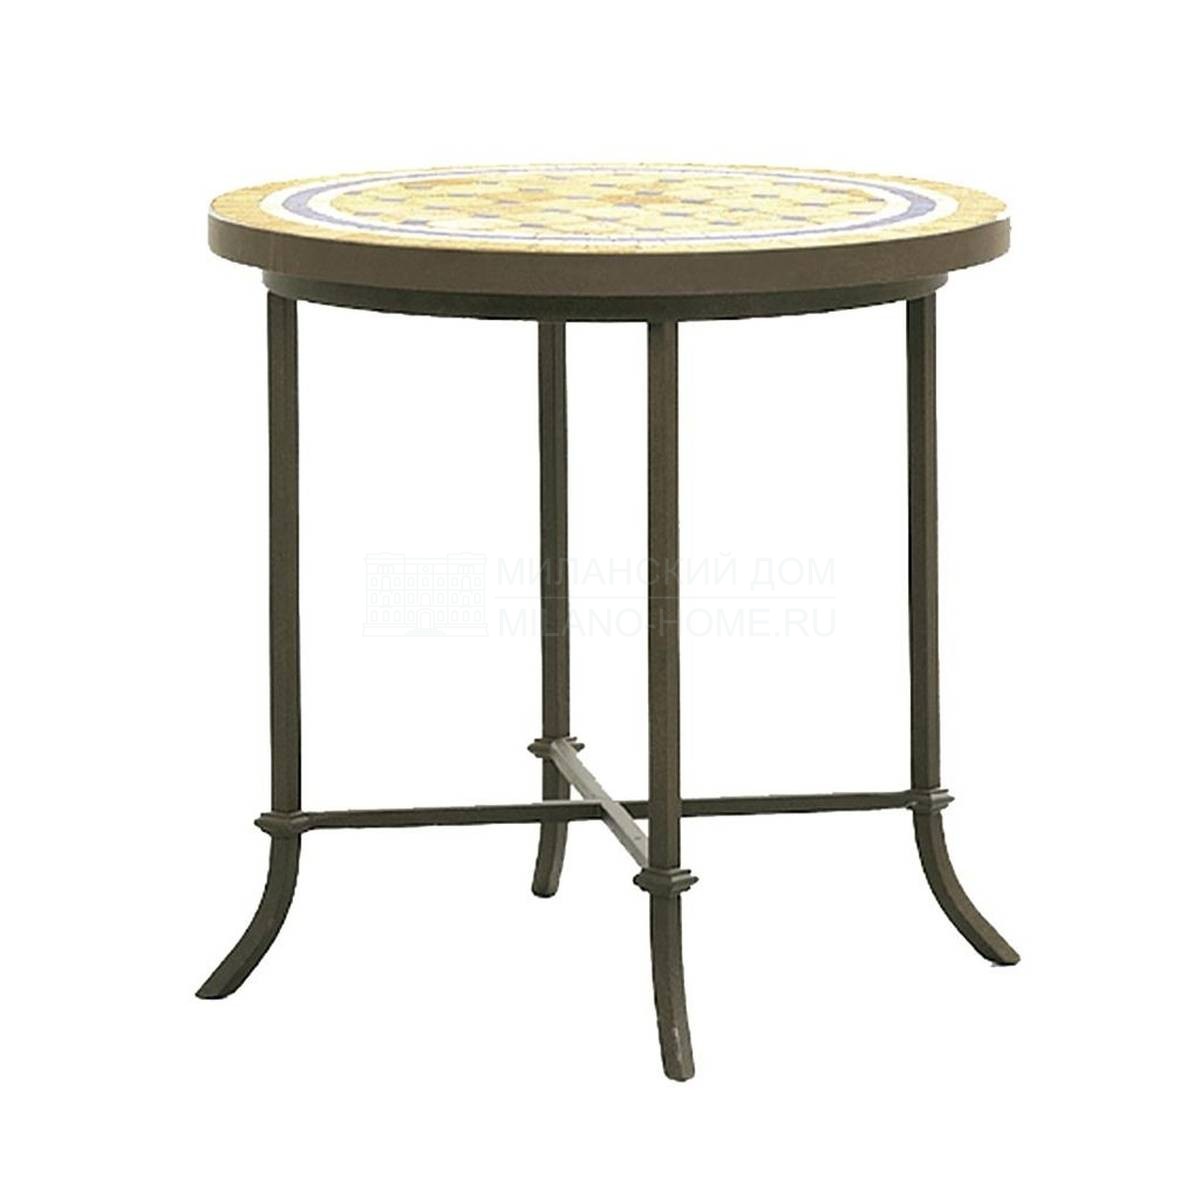 Круглый стол art.H1100 / round table из Испании фабрики GUADARTE